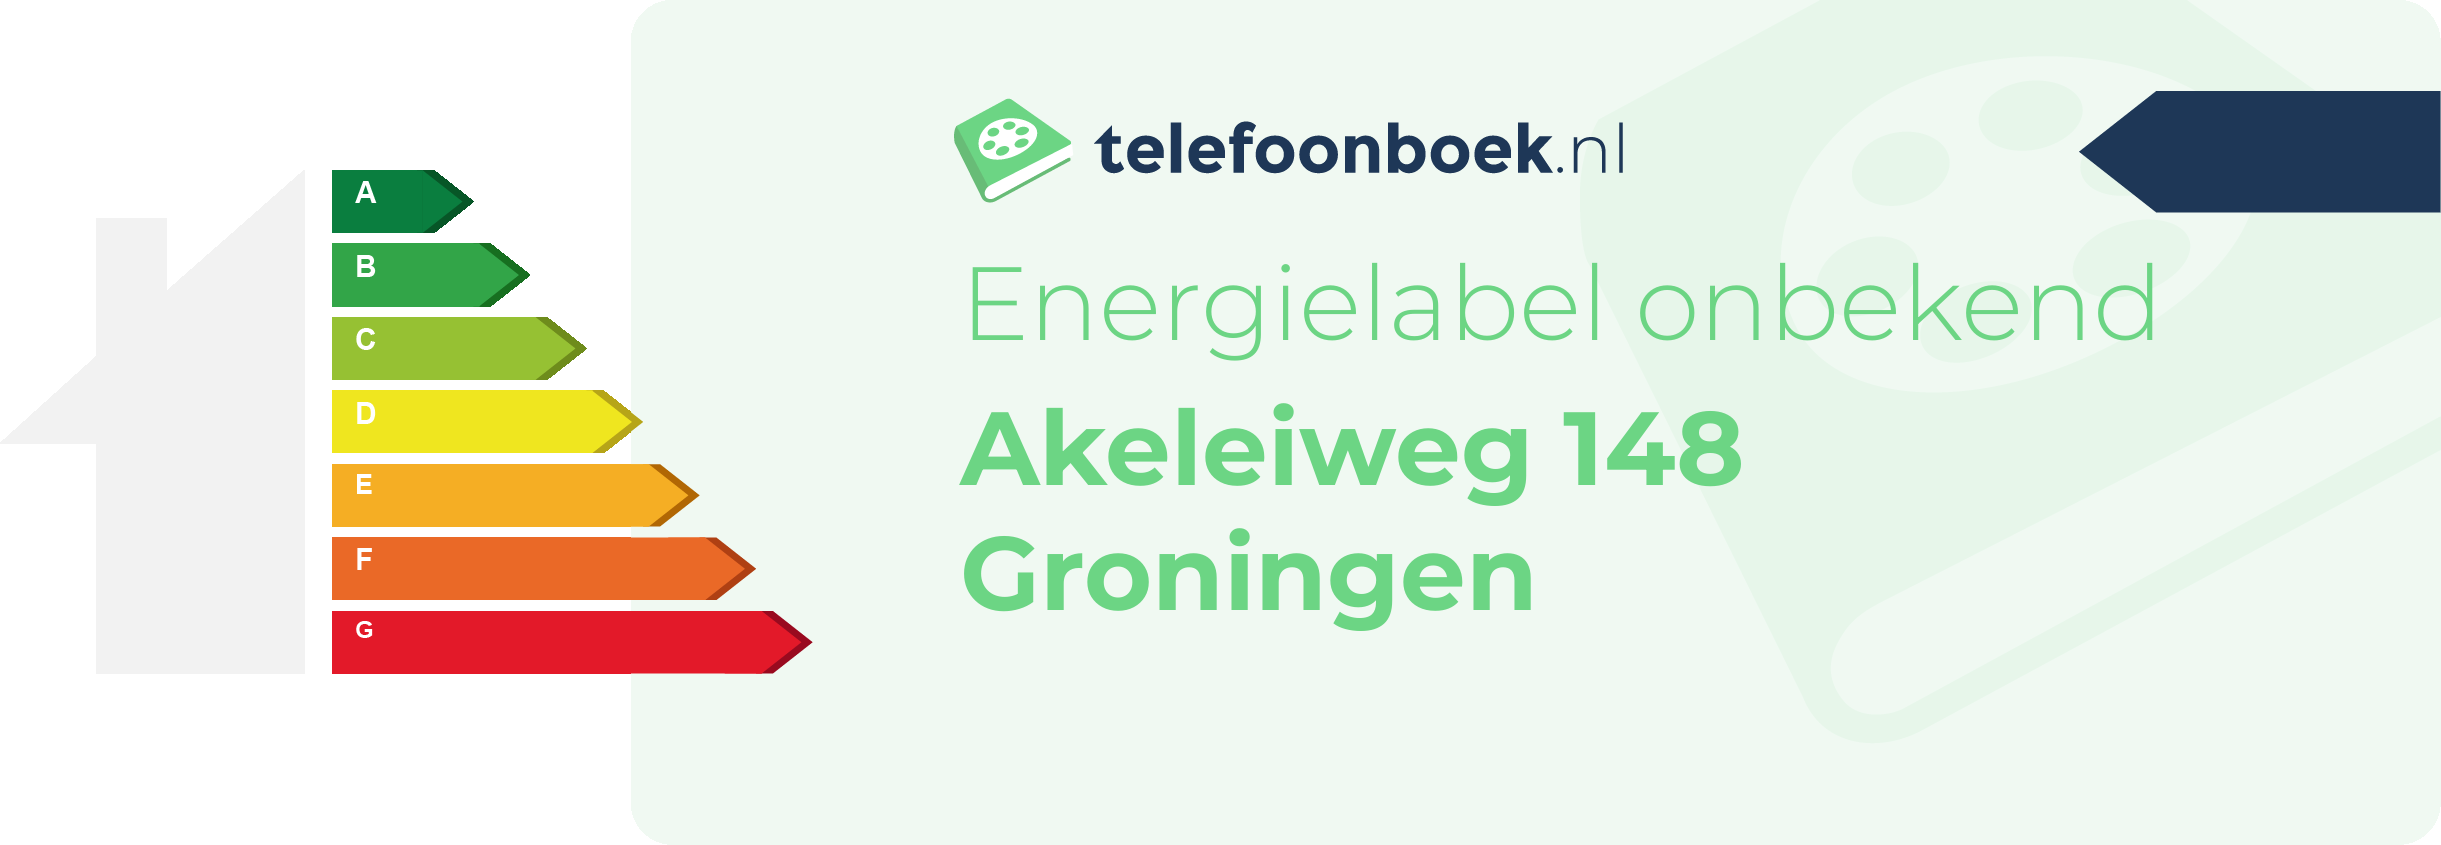 Energielabel Akeleiweg 148 Groningen